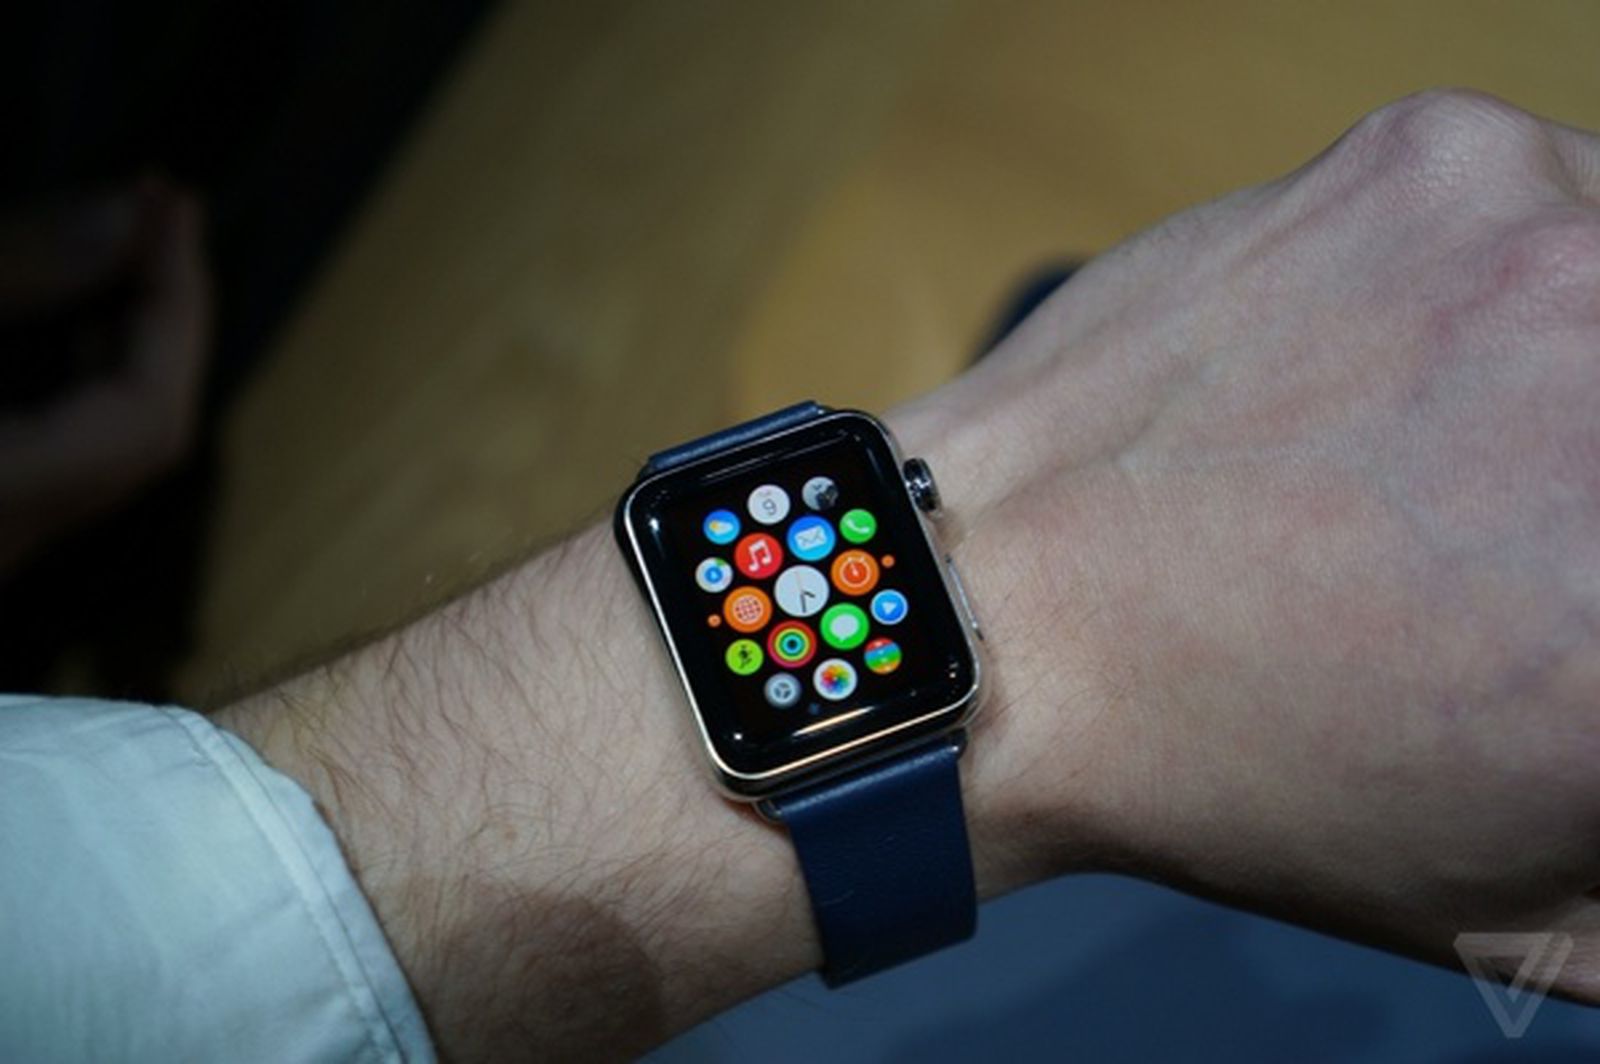 Iphone apple watch 3. Эппл вотч. Эпл вотч 2014. Apple watch 1. Apple Smart watch.